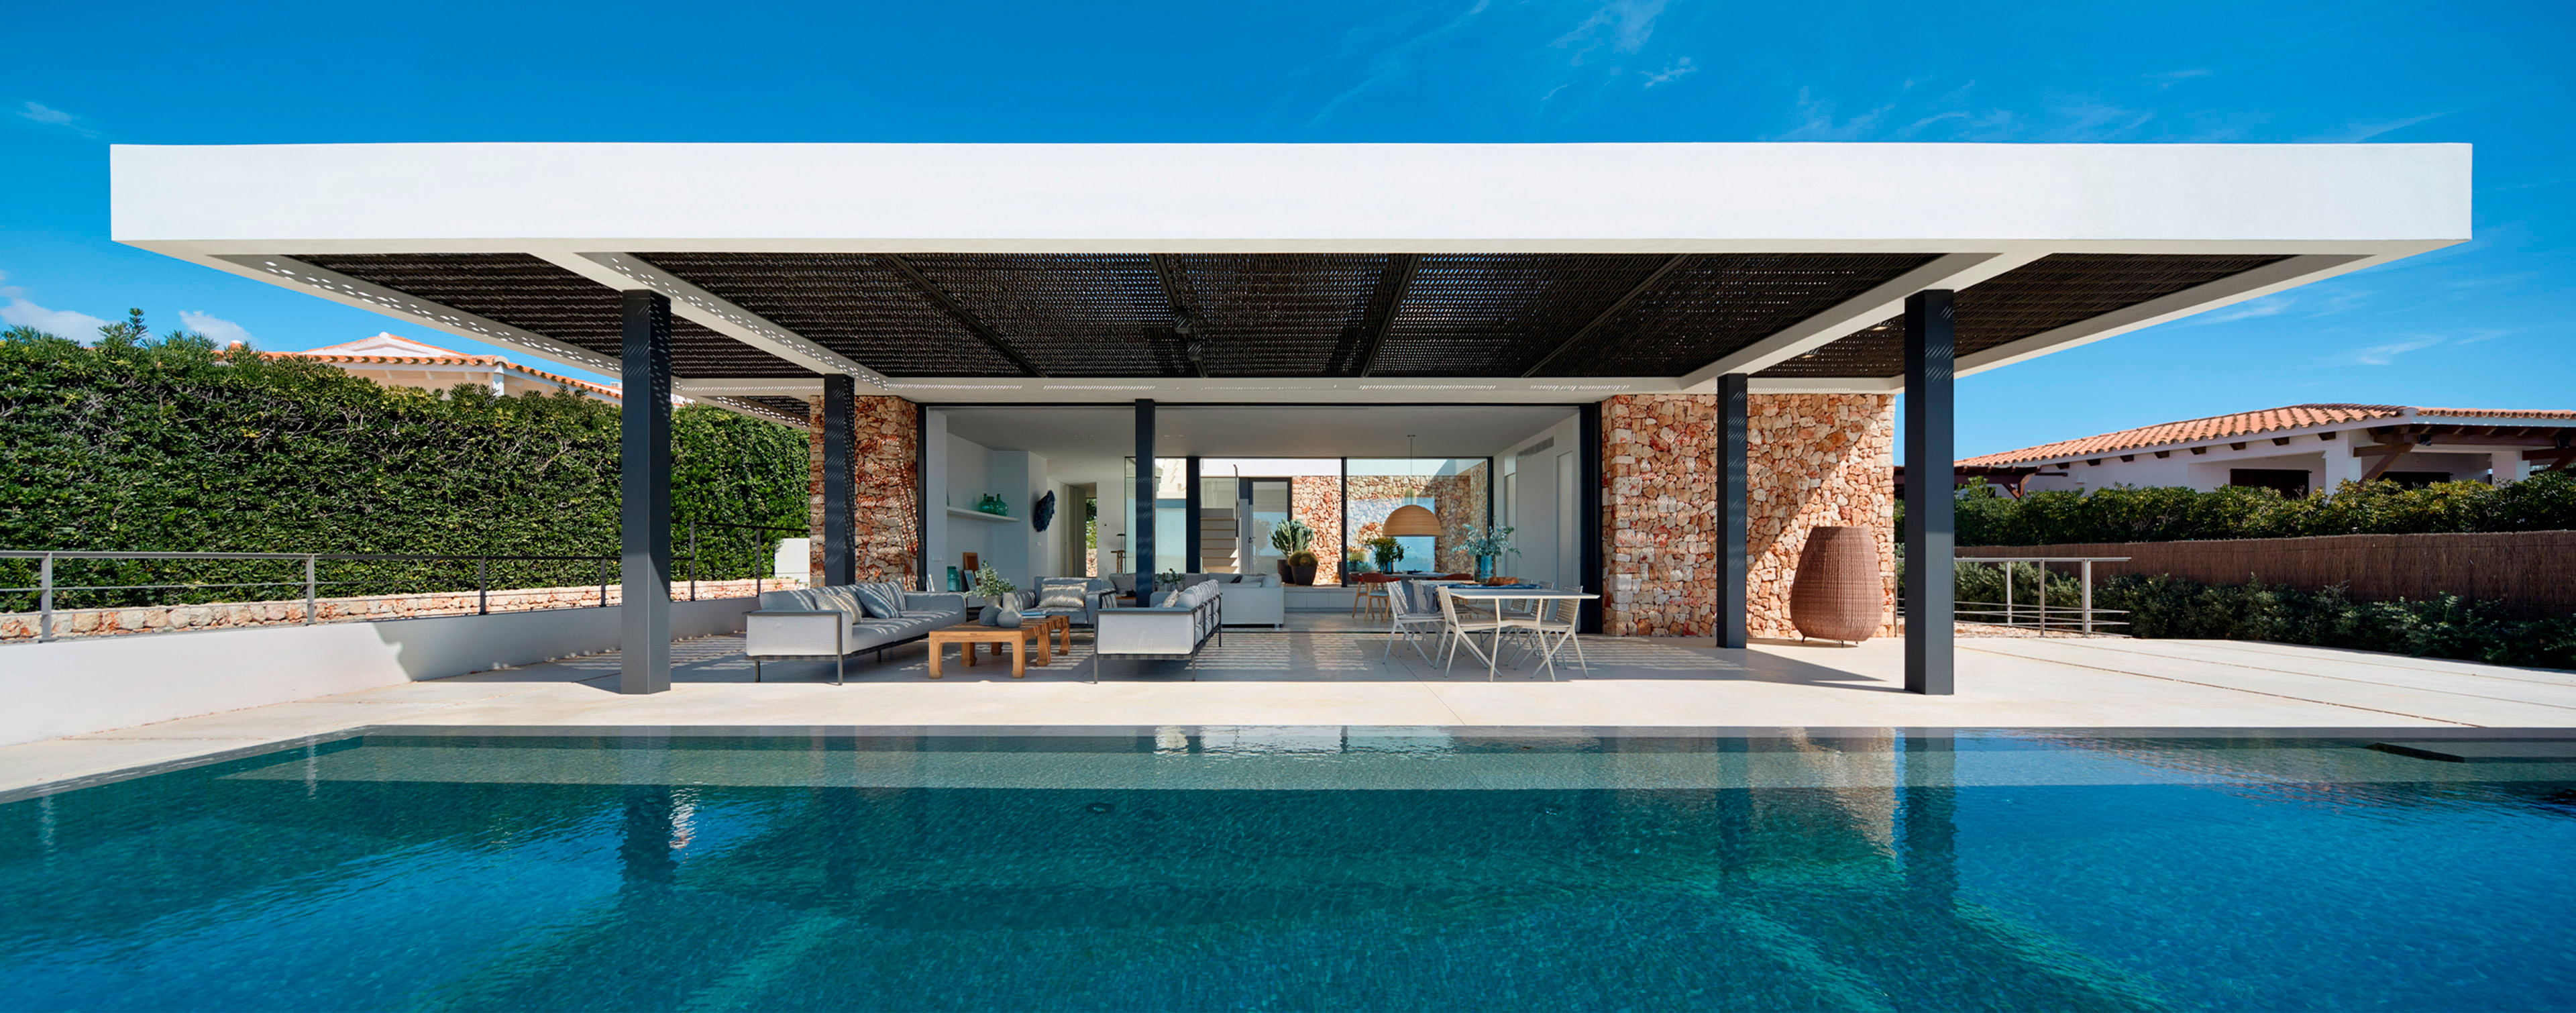 luv studio luxury architects menorca binibequer house IMG 01 - LUV Studio - Architecture et design - Barcelone